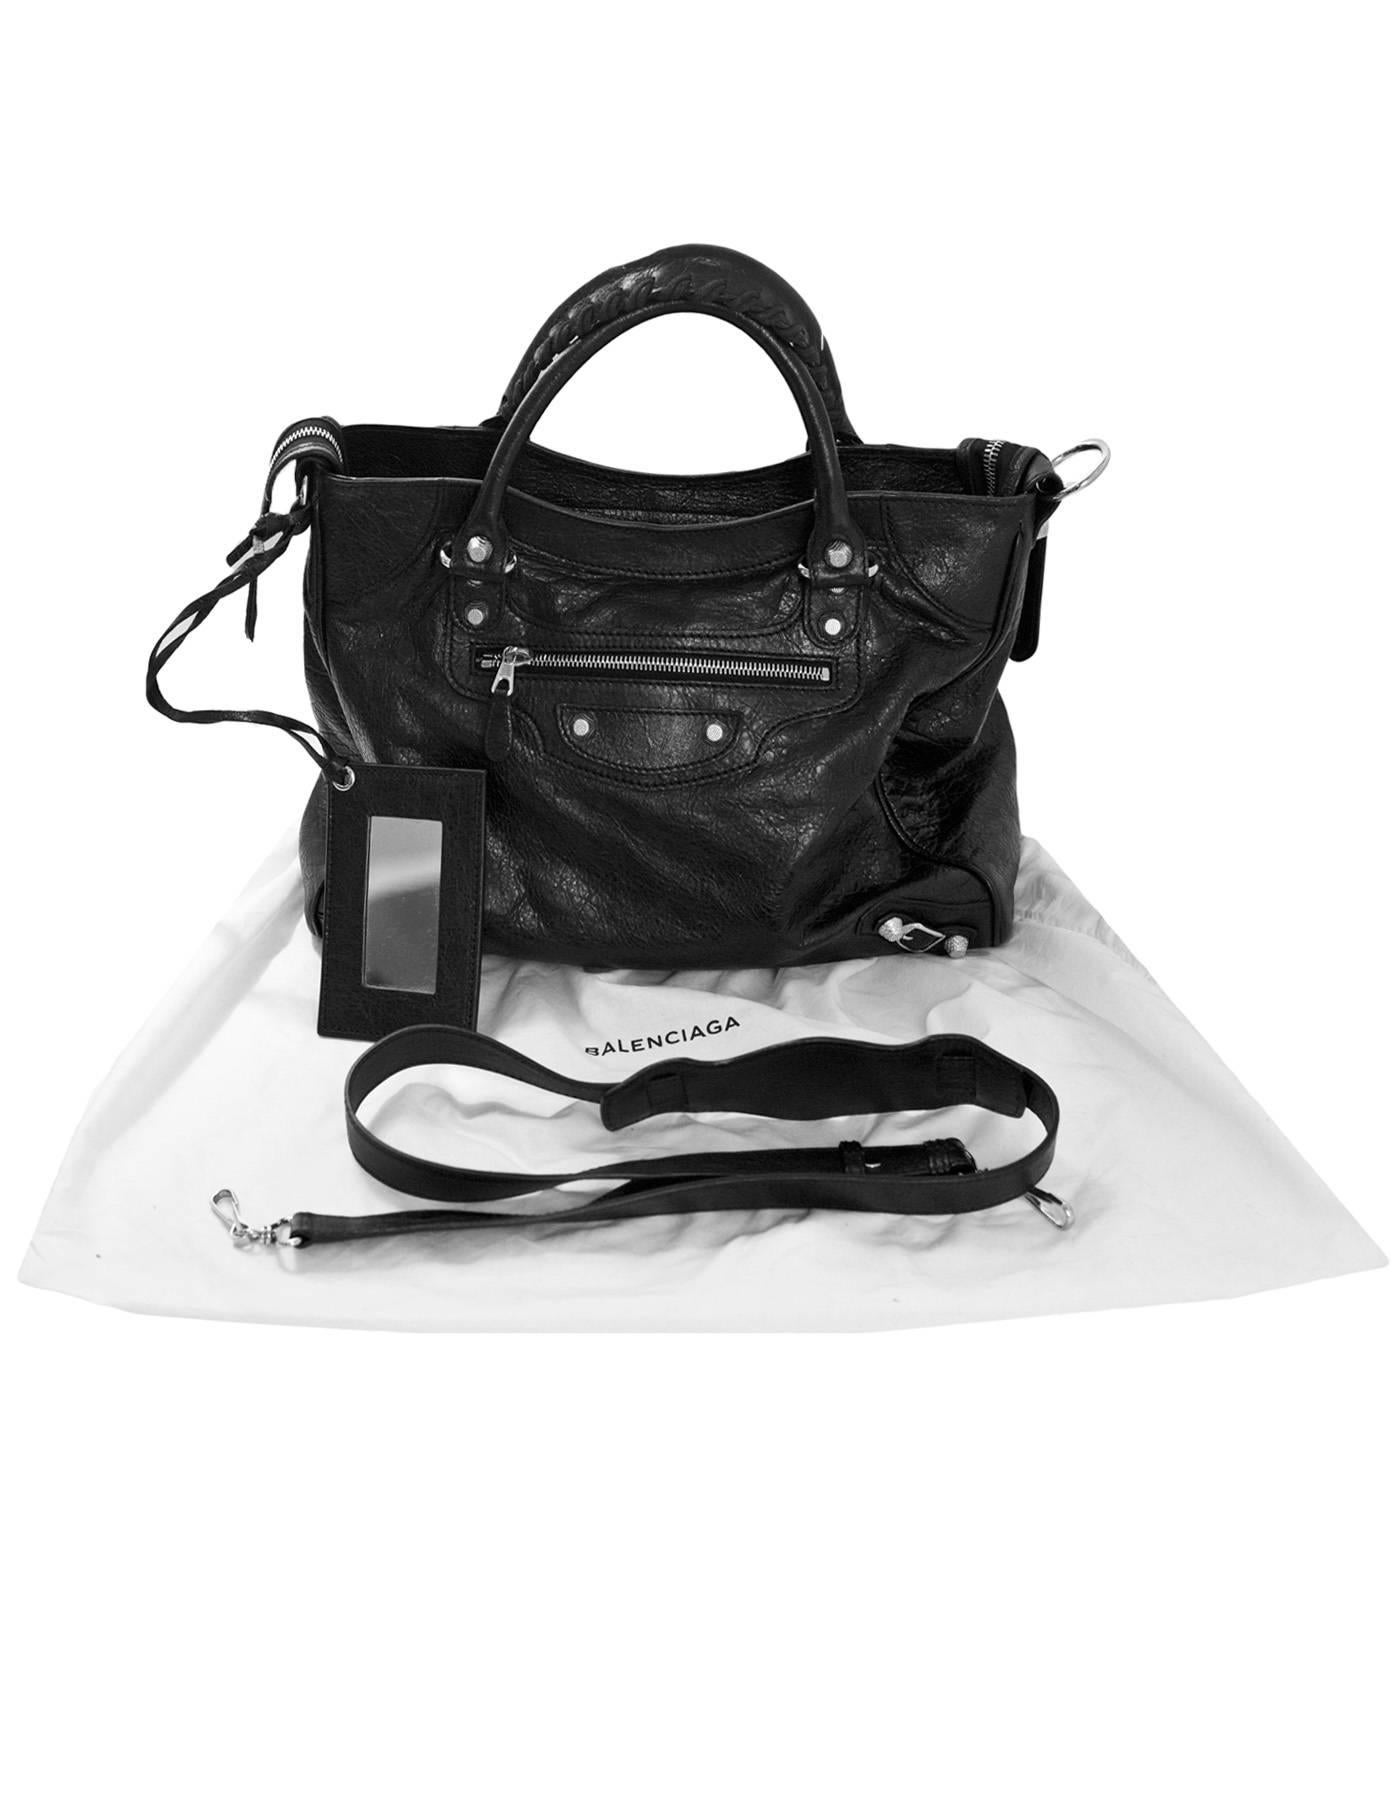 Balenciaga Black Lambskin Giant 12 Velo Messenger Bag with Dust Bag 5